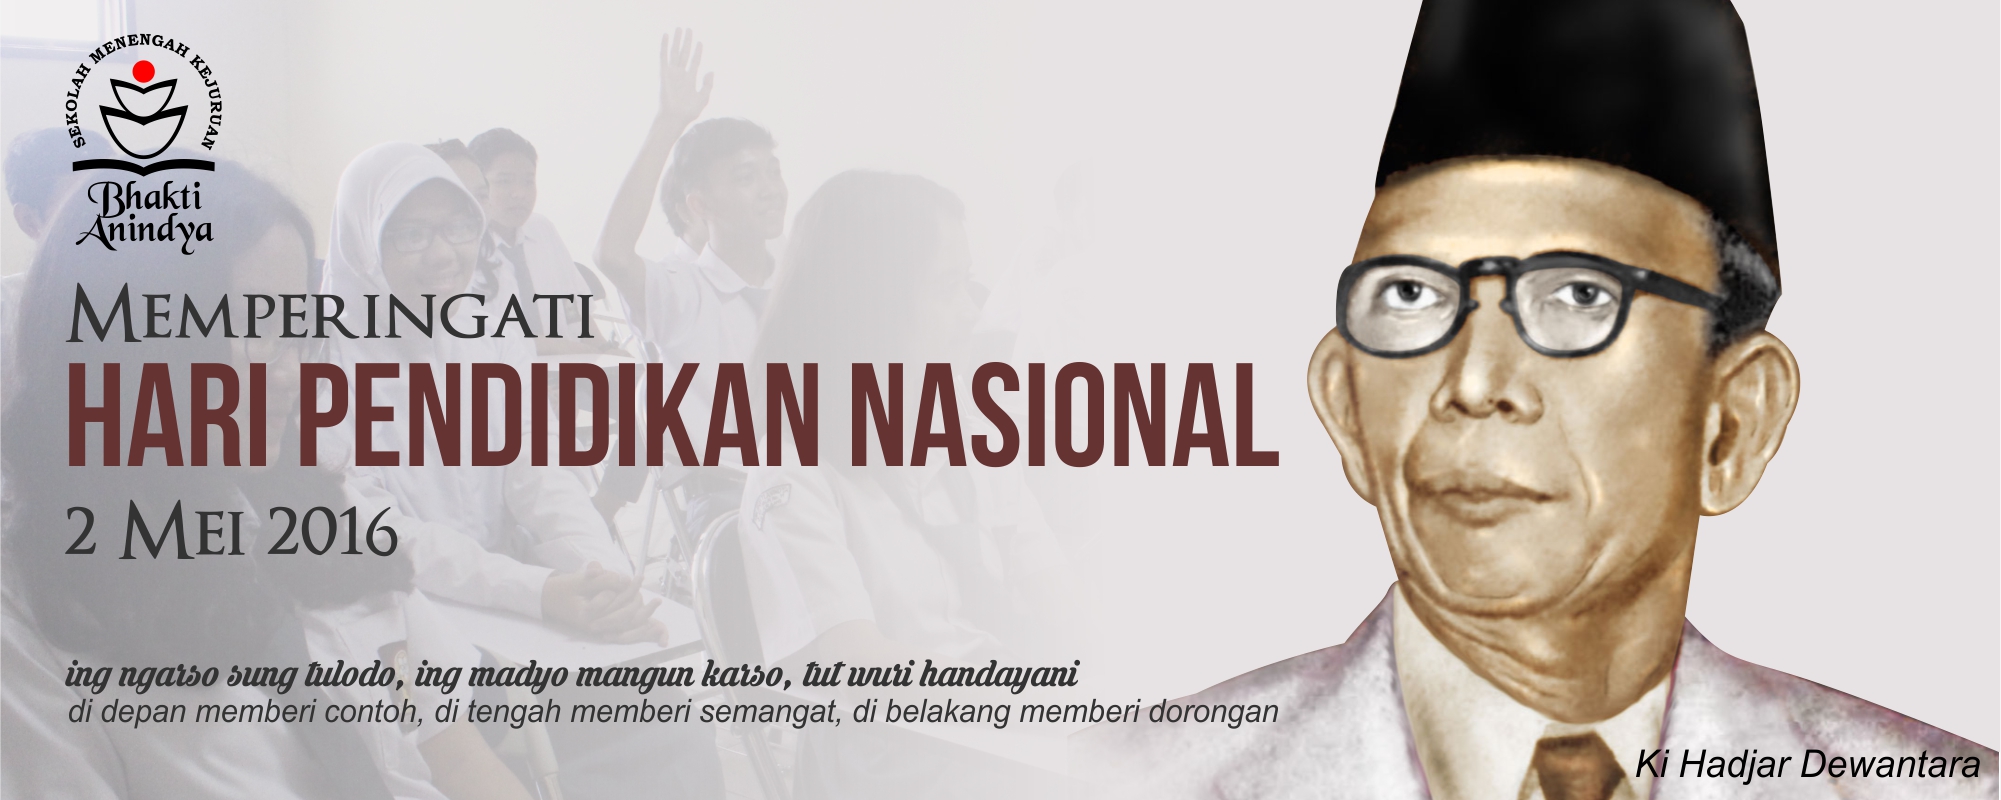 Selamat Hari Pendidikan Nasional 2 Mei 2016 SMK Bhakti Anindya Tangerang